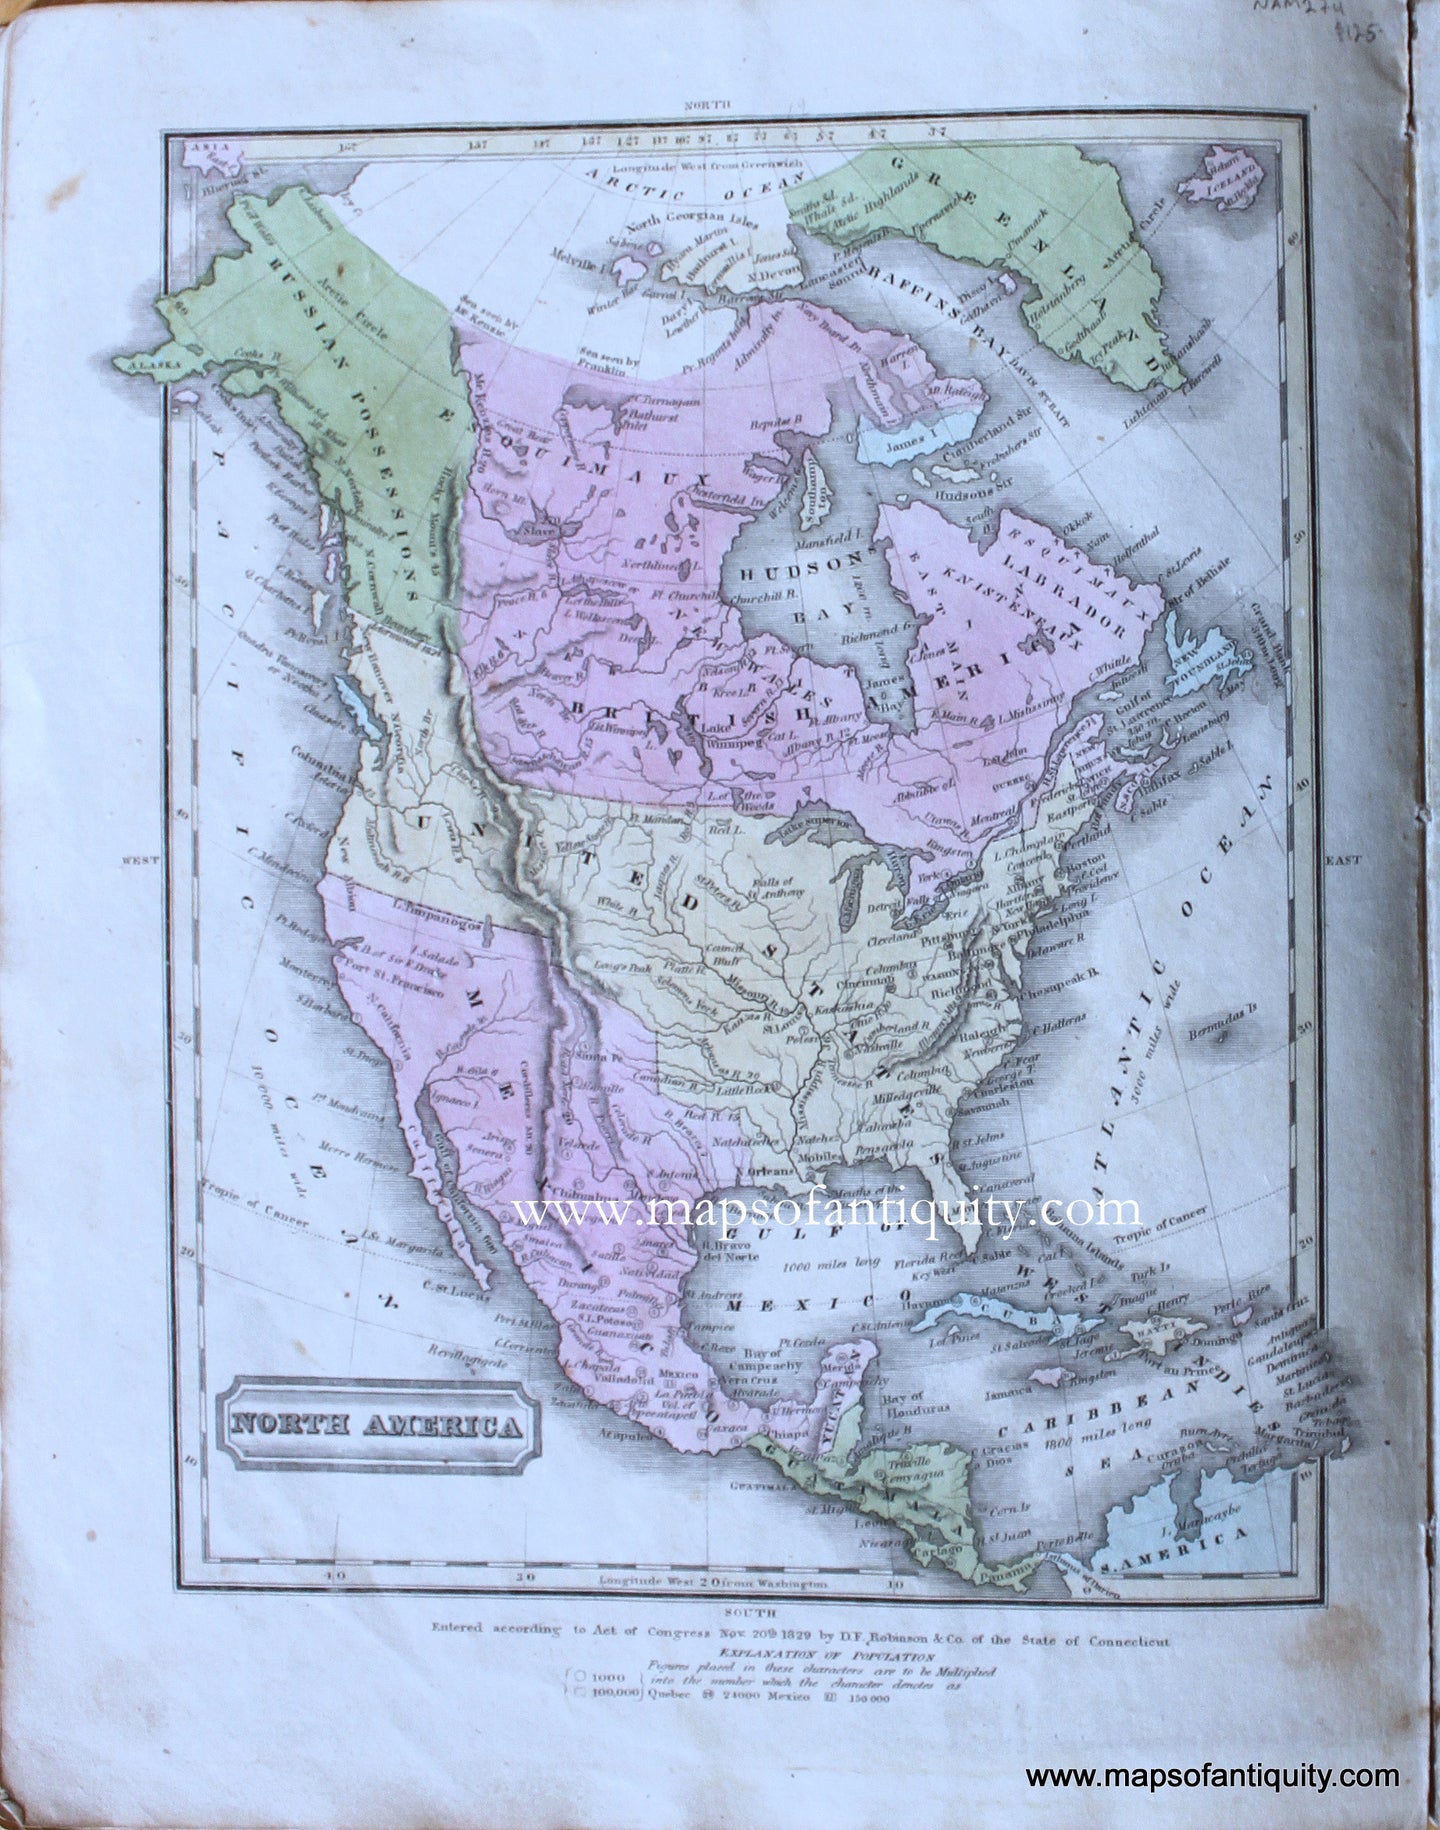 Genuine-Antique-Map-North-America-1830-E.-Huntington-/-D.F.-Robinson-&-Co.-Maps-Of-Antiquity